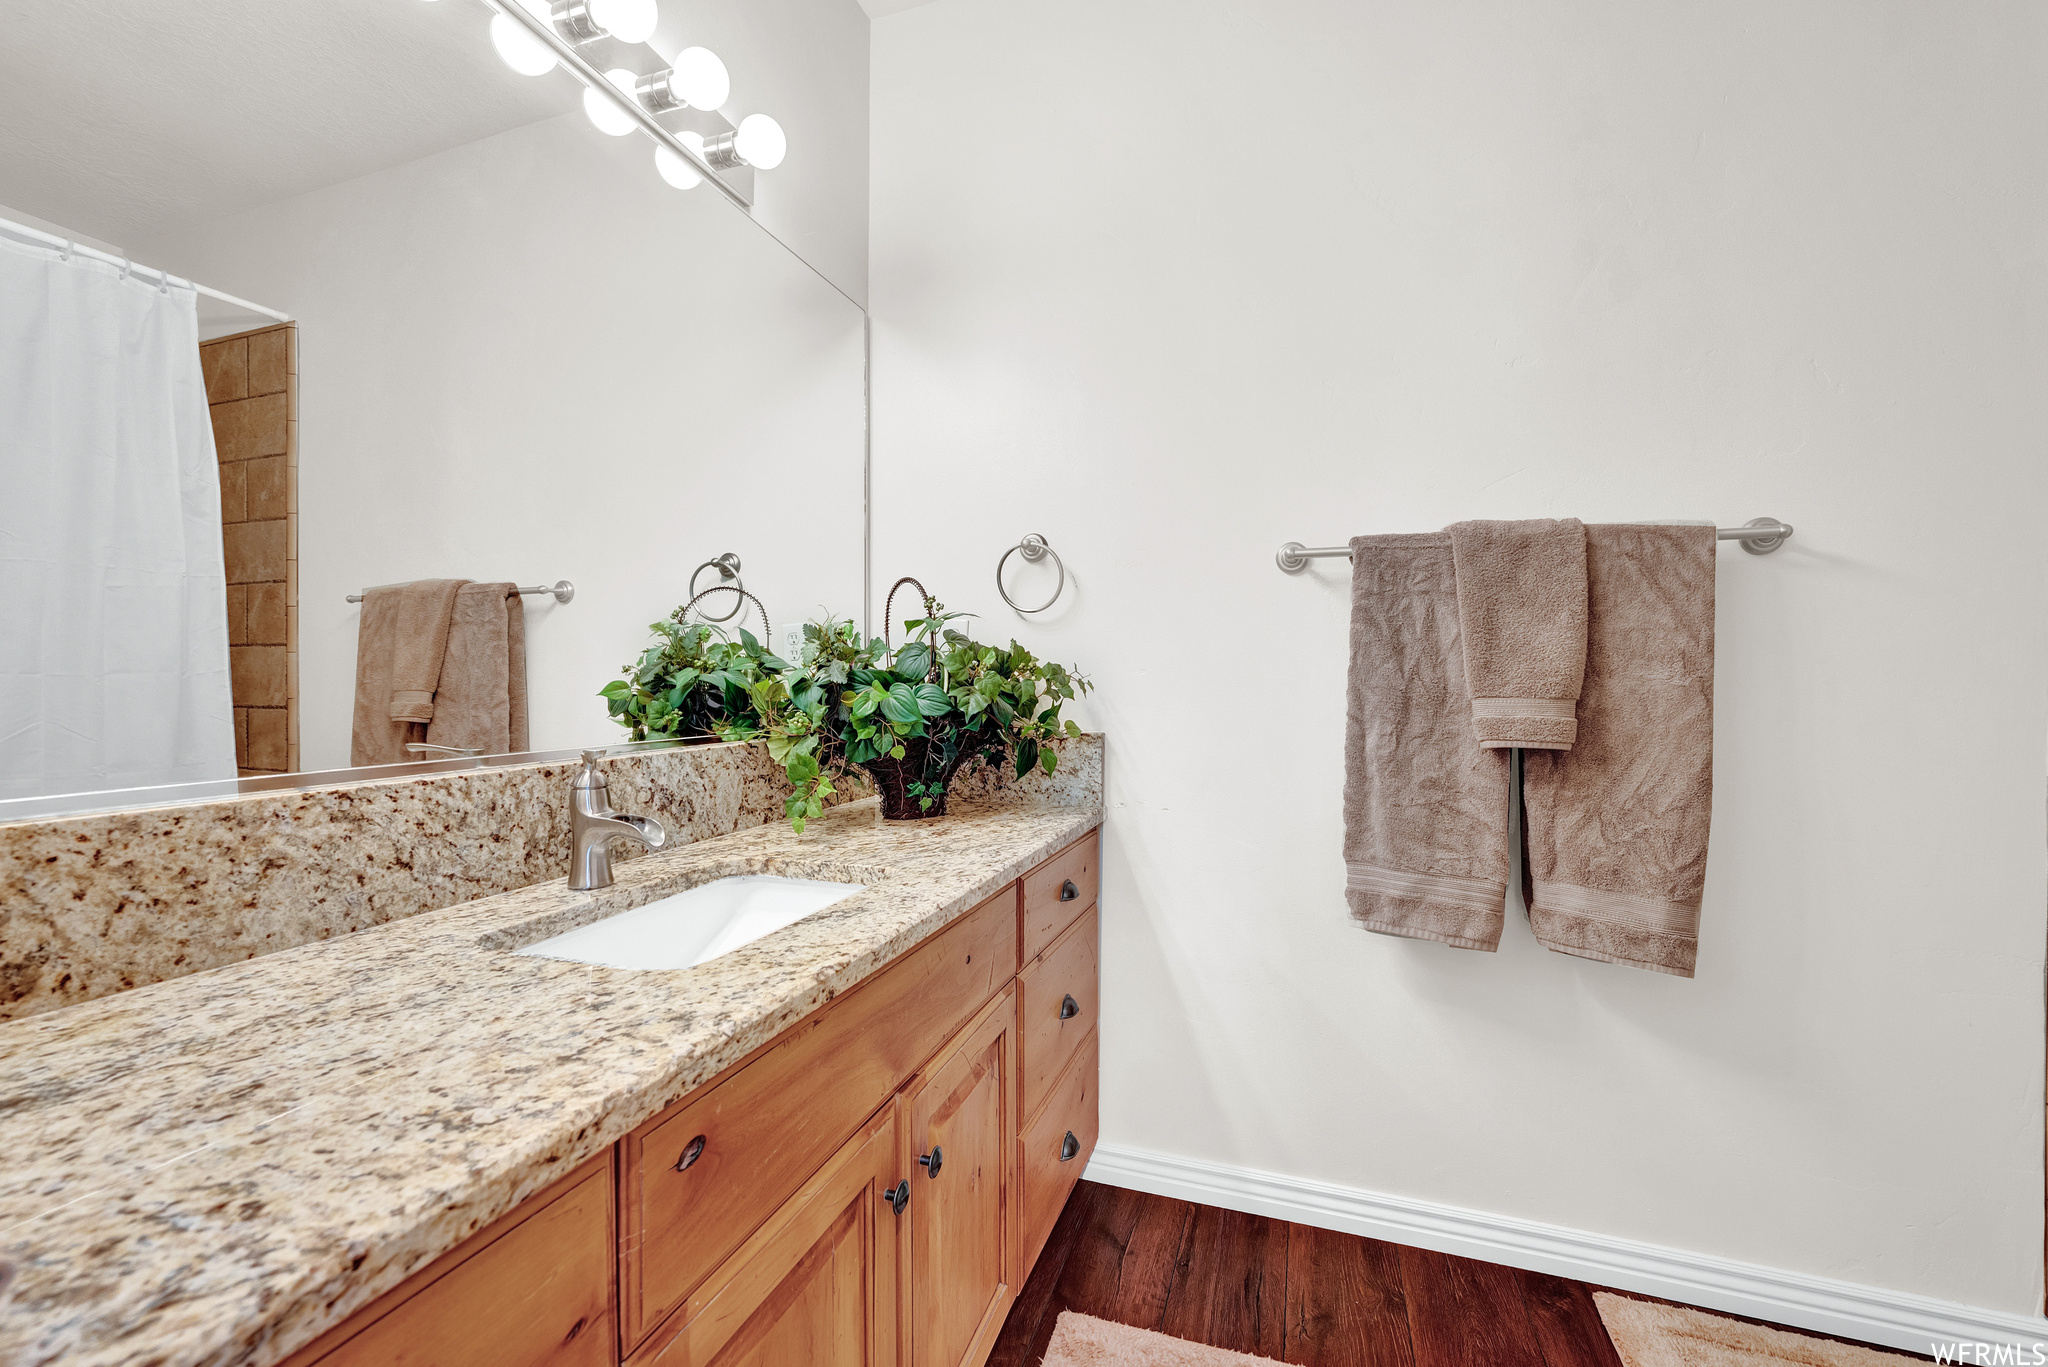 Level 2 Bathroom: Master ensuite bathroom featuring hardwood floors, vanity, mirror, and shower curtain